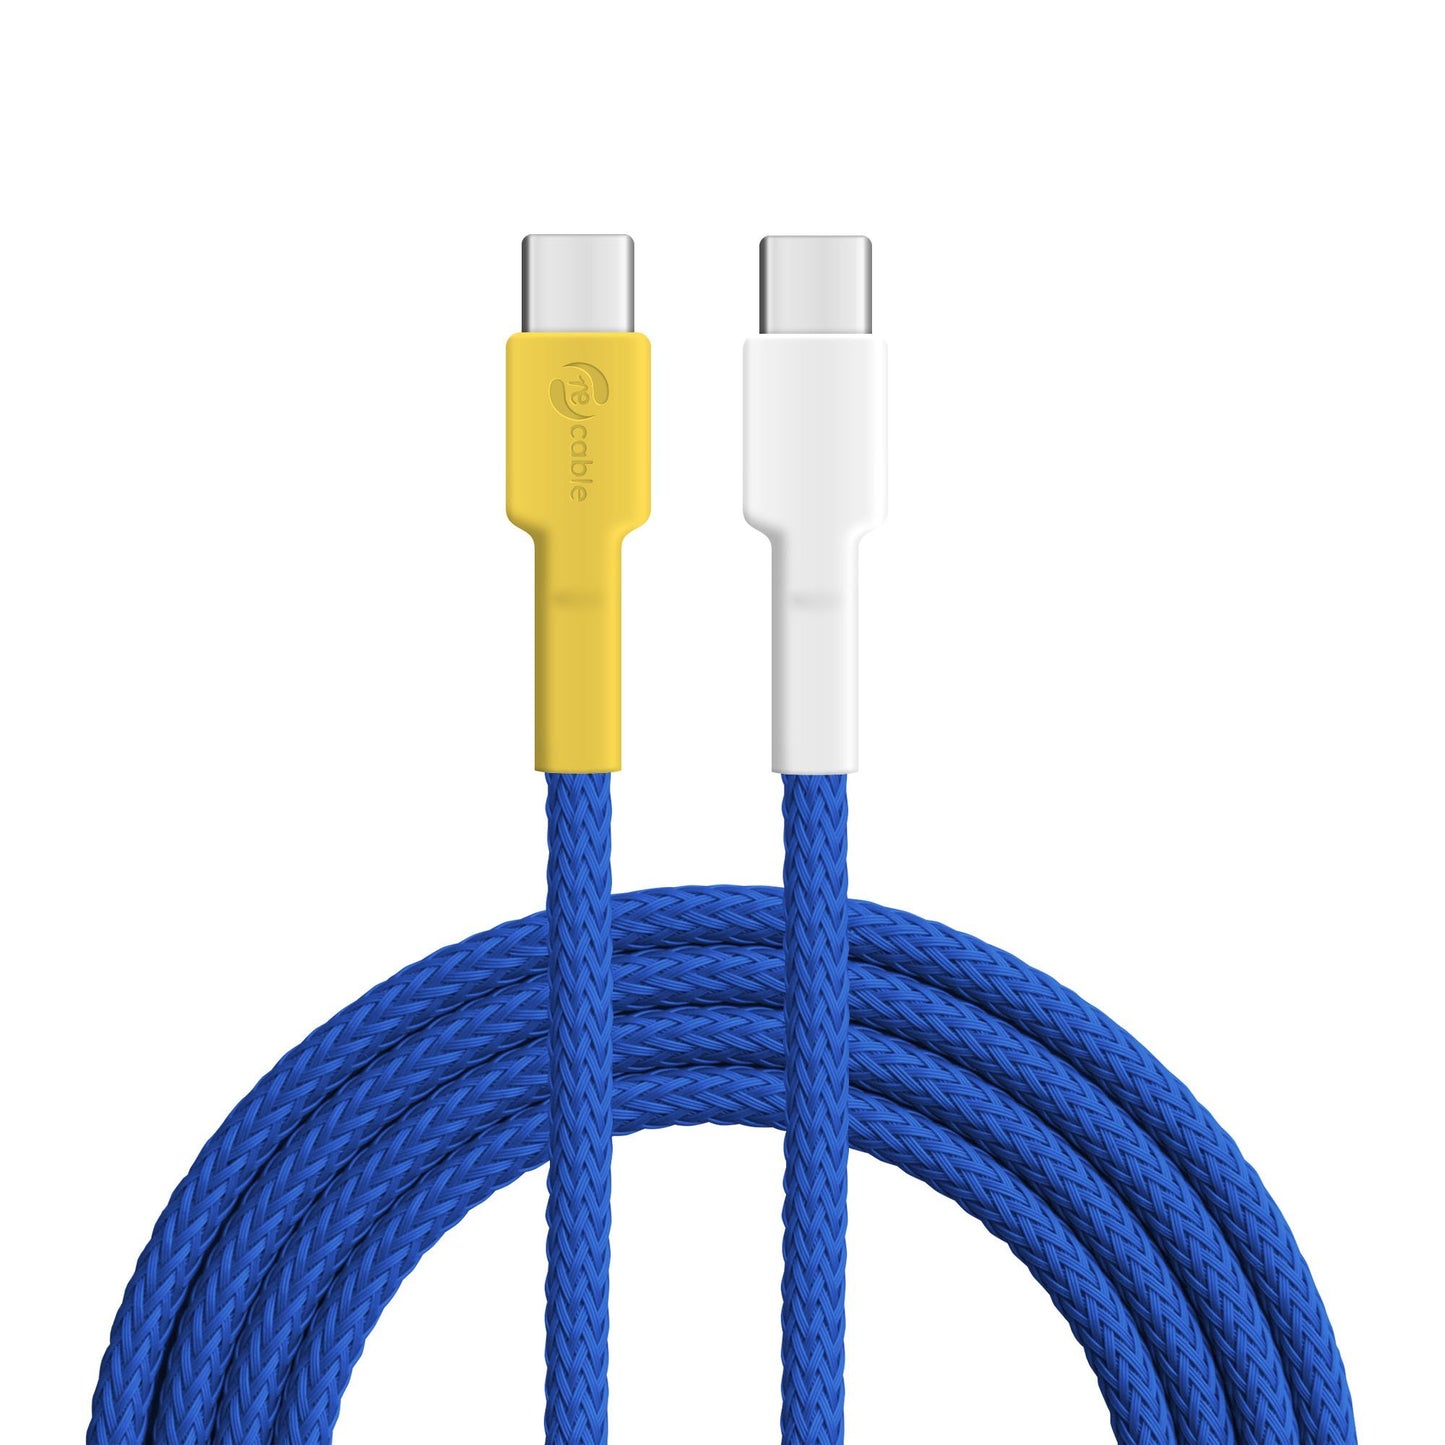 USB-Kabel, Design: Blaumeise, Anschlüsse: USB C auf USB C